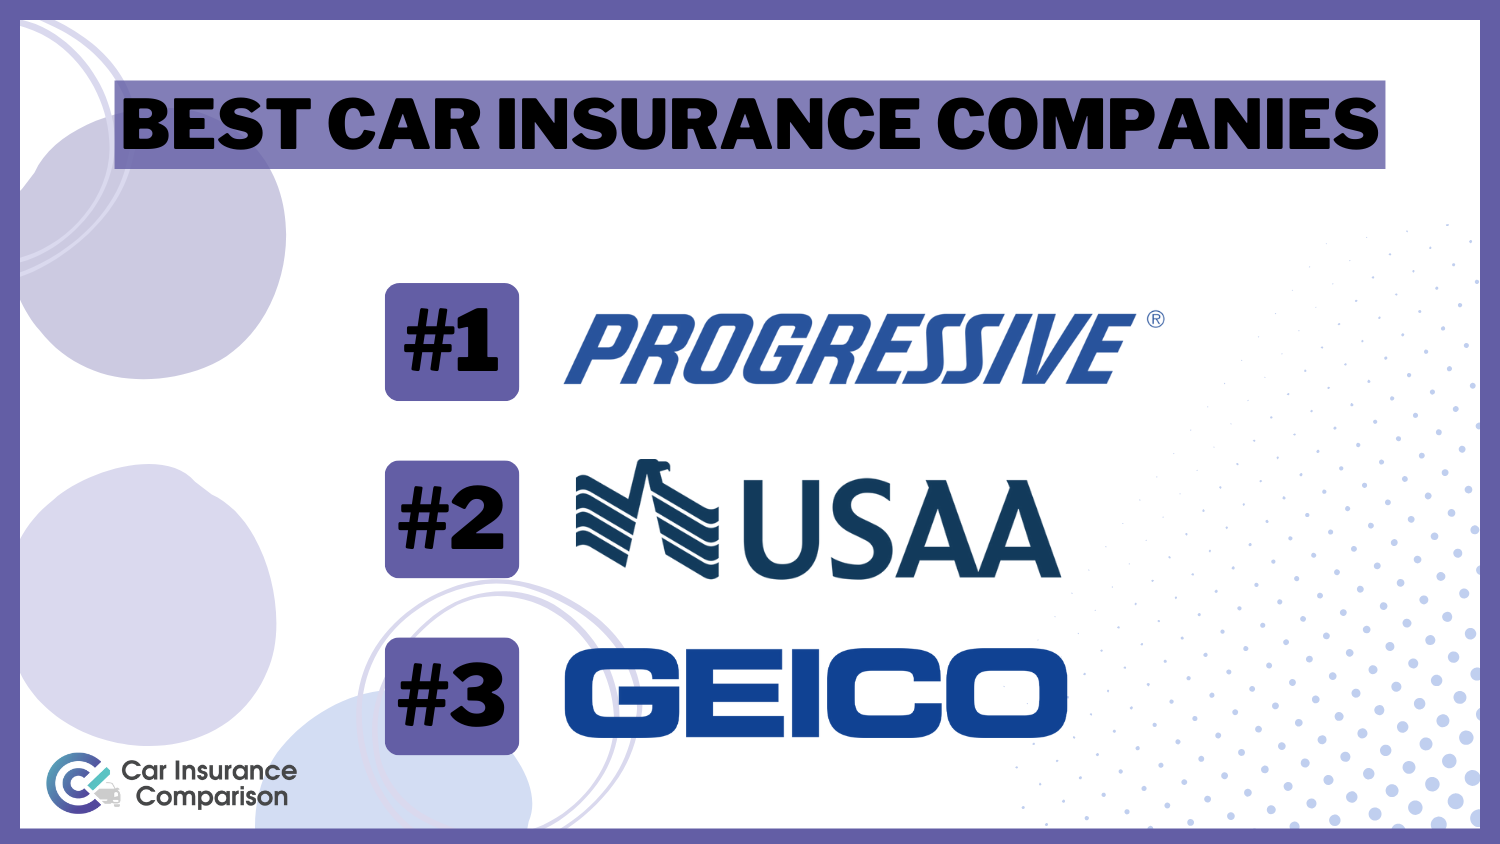 Best Car Insurance Companies: Progressive, USAA, Geico